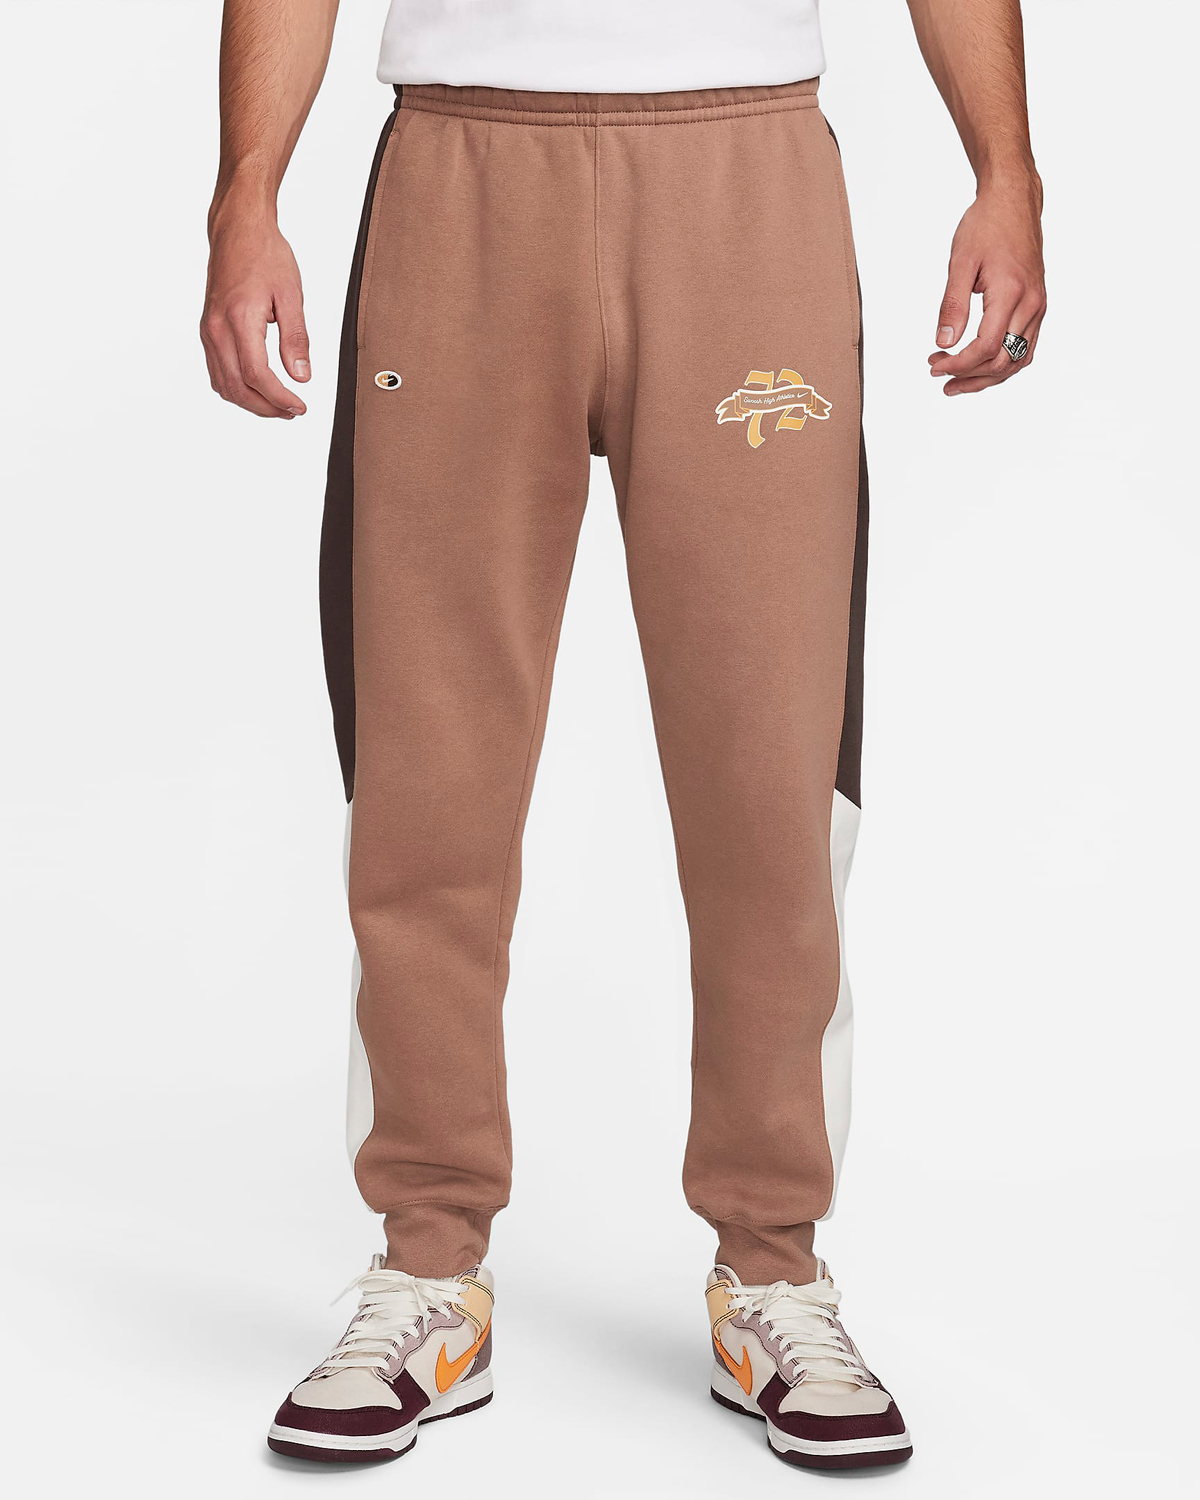 Nike-Club-Fleece-Graphic-Jogger-Pants-Archaeo-Brown-Baroque-Brown-1